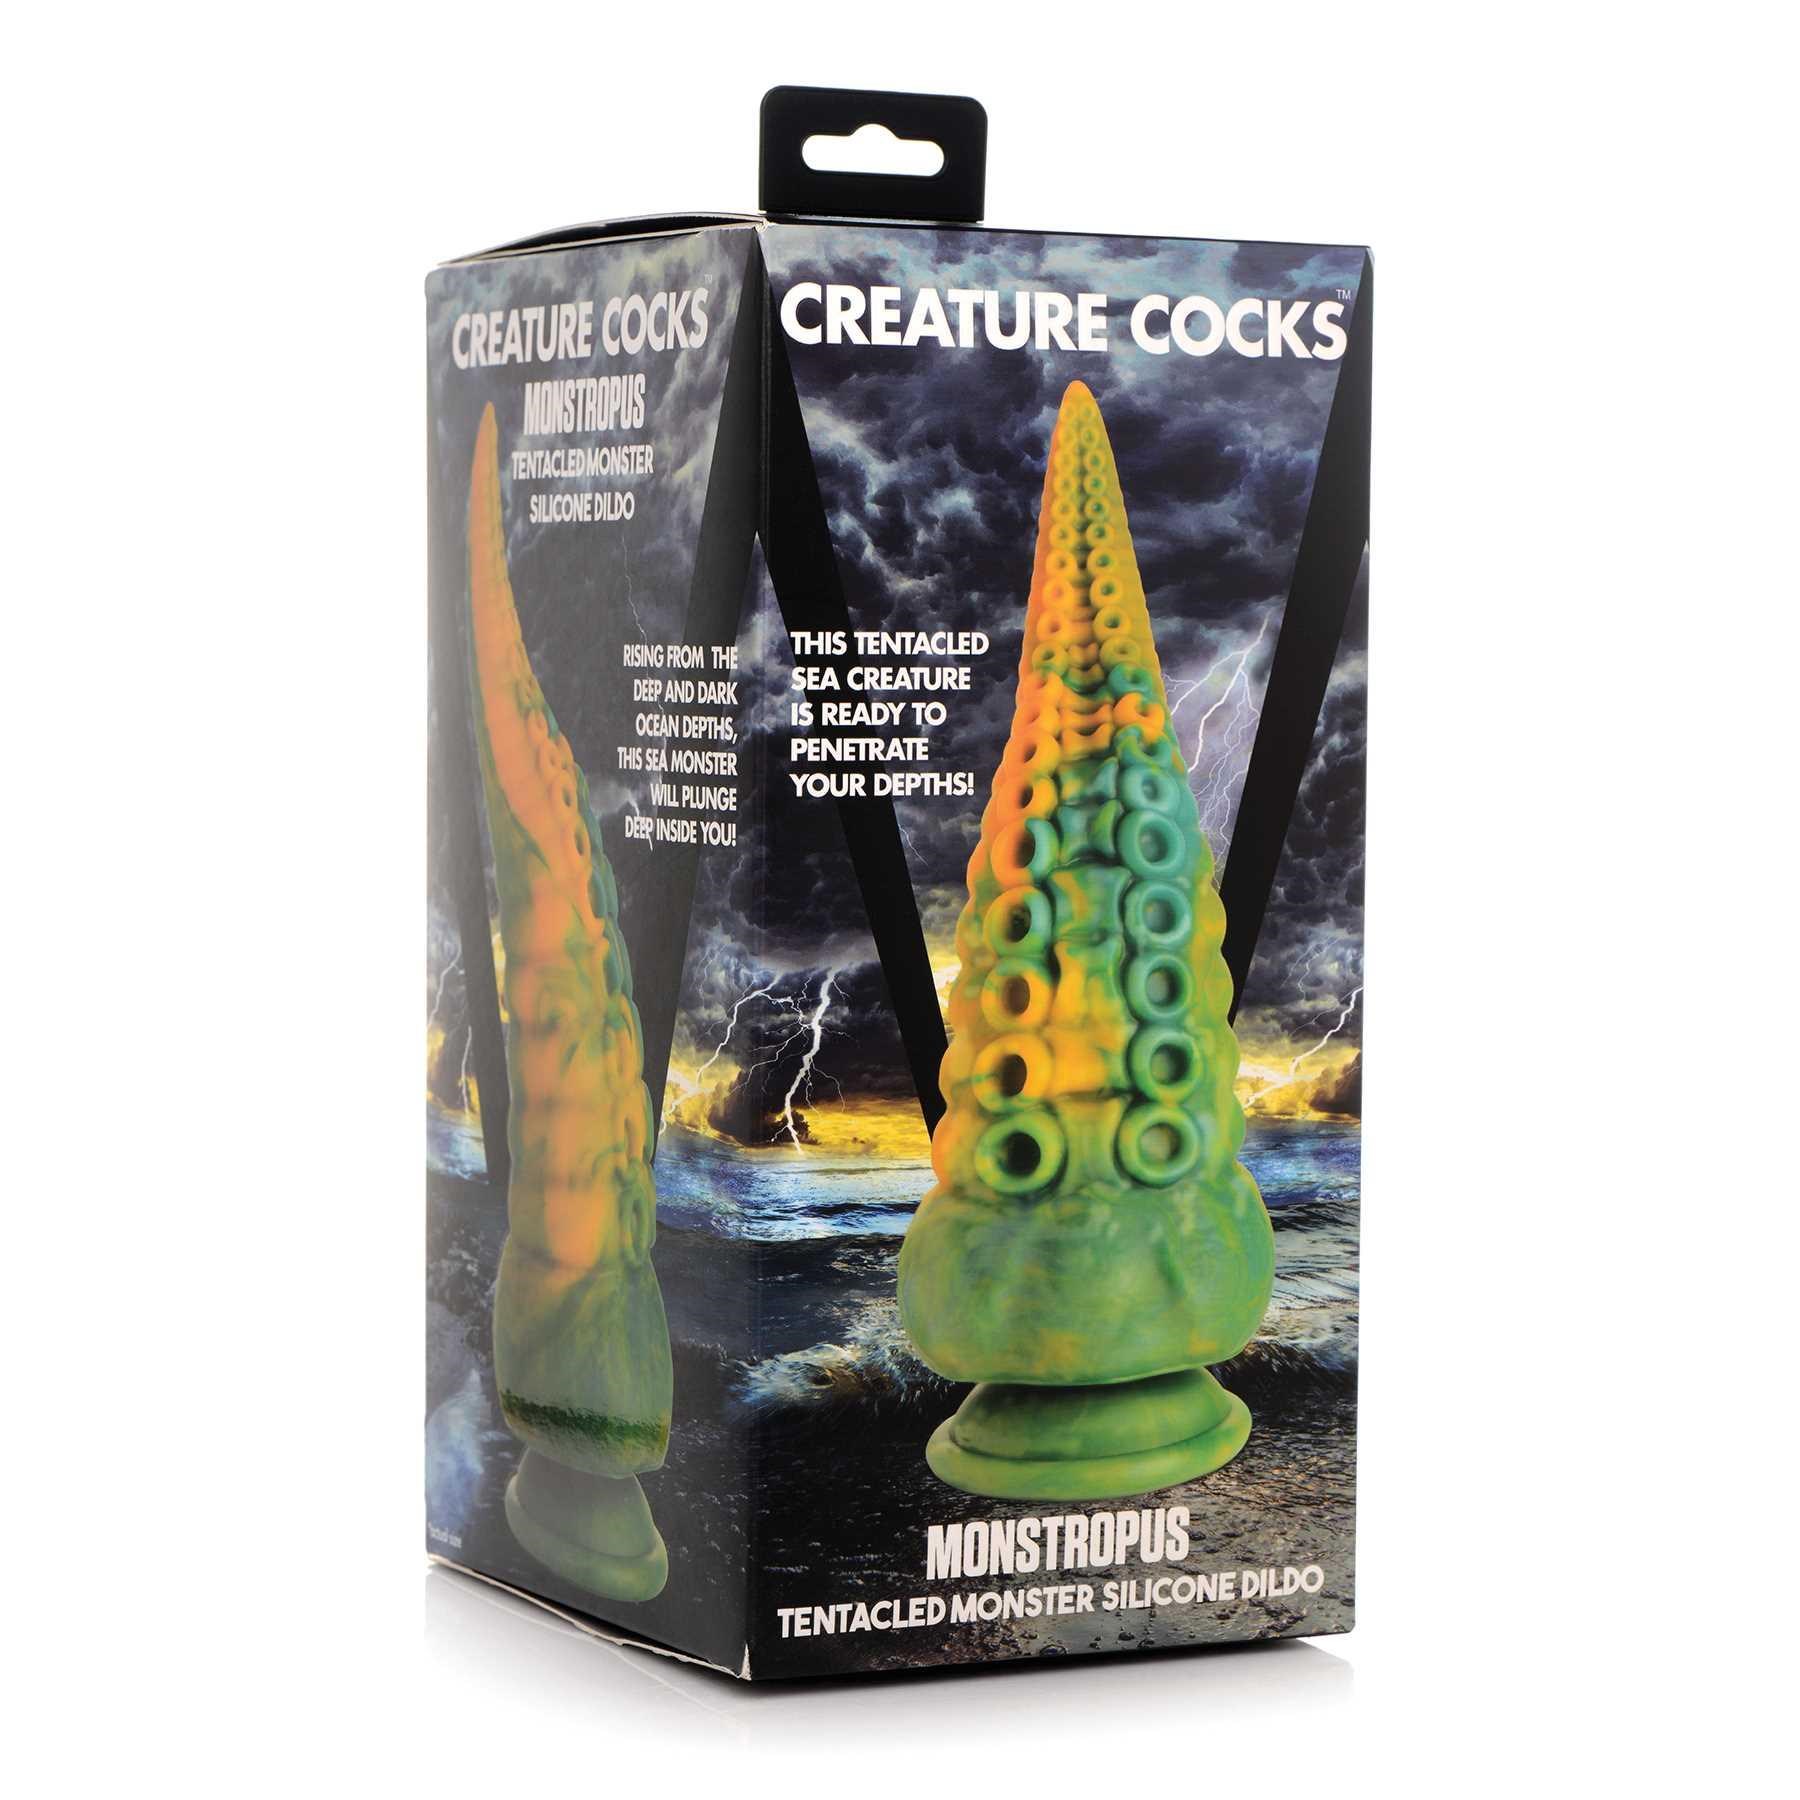 CreatureCocks Monstropus Tentacled Dildo packaging